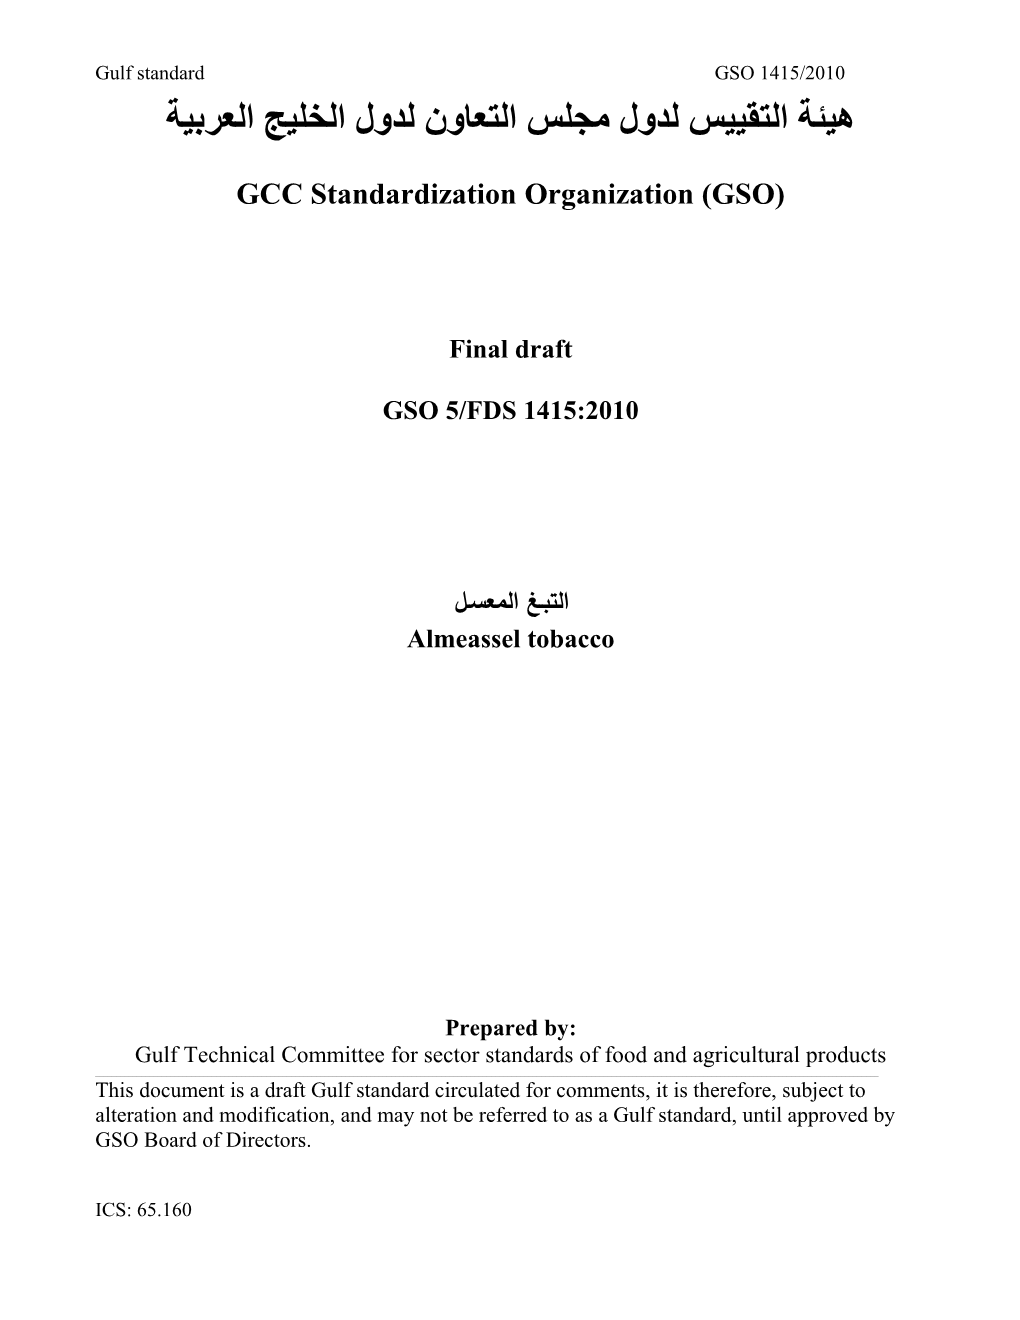 GSS Standardization Organization (GSO)